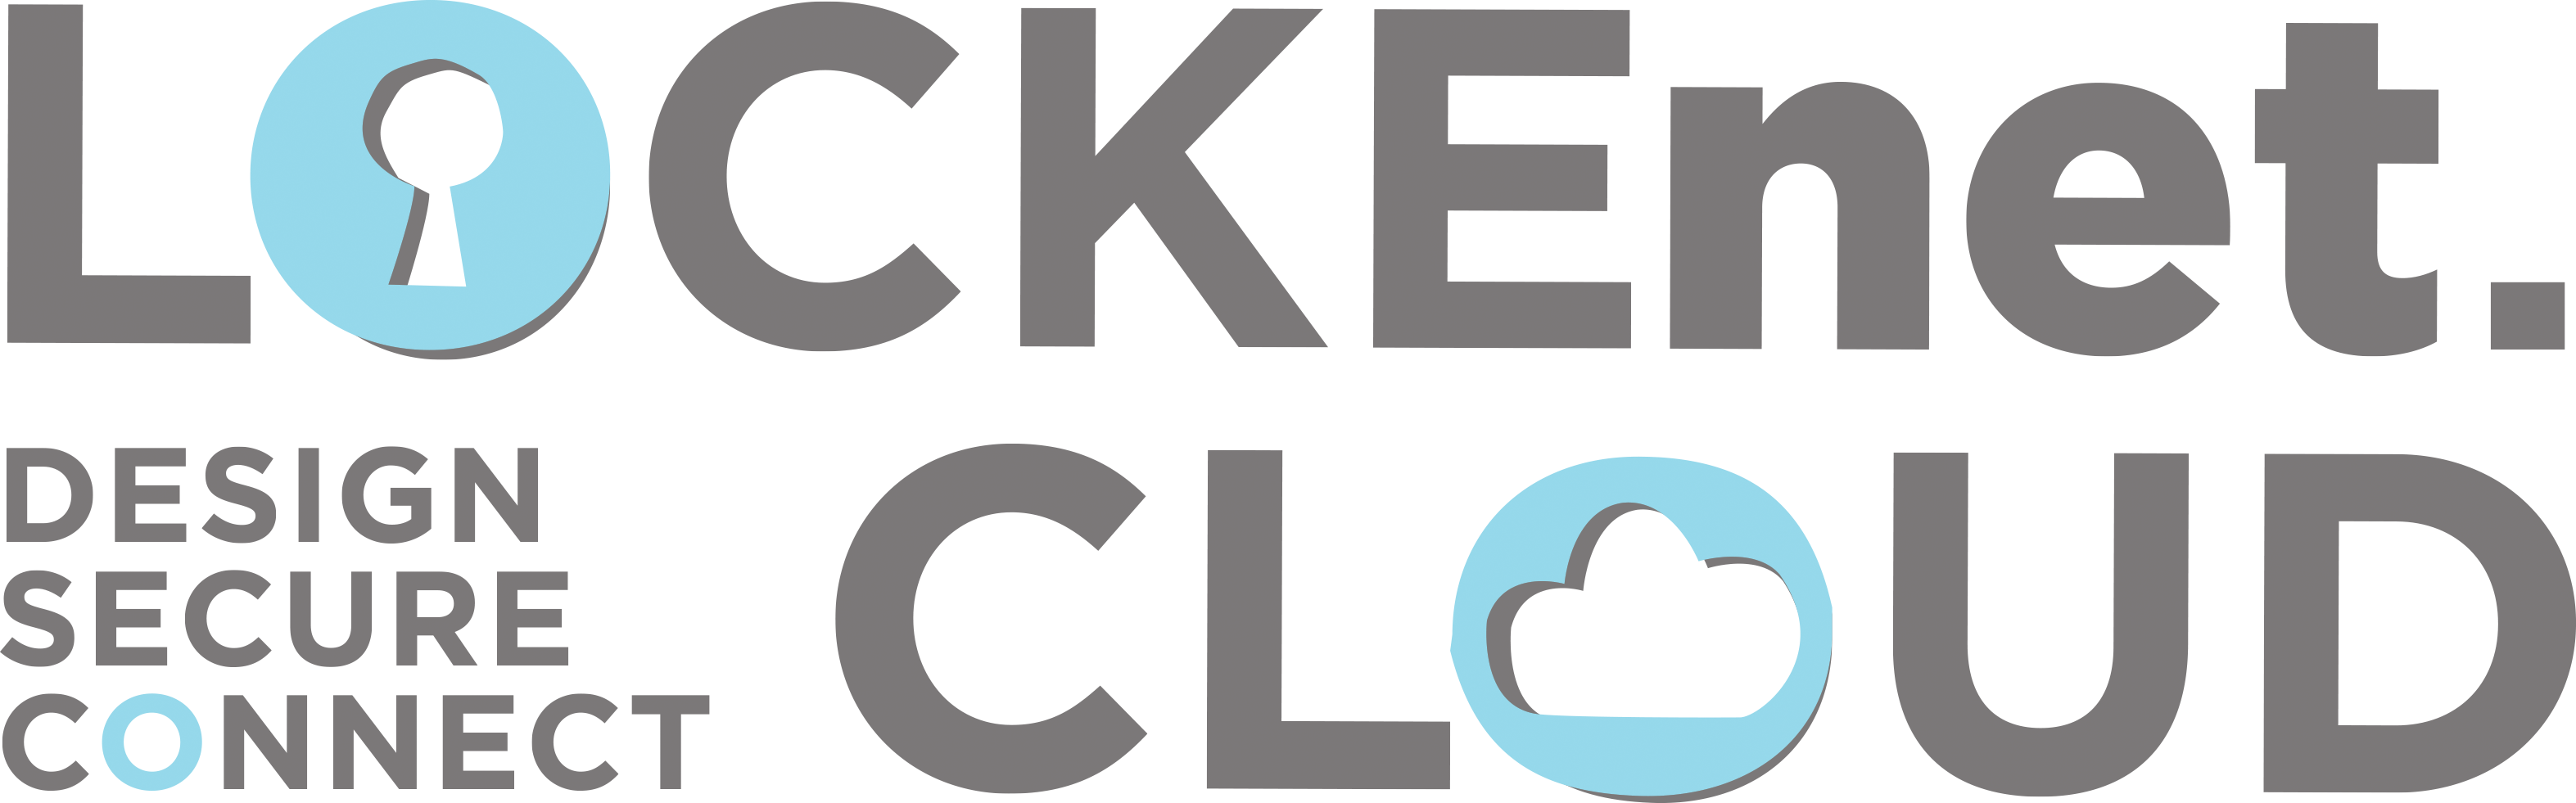 Lockenet.cloud logo file